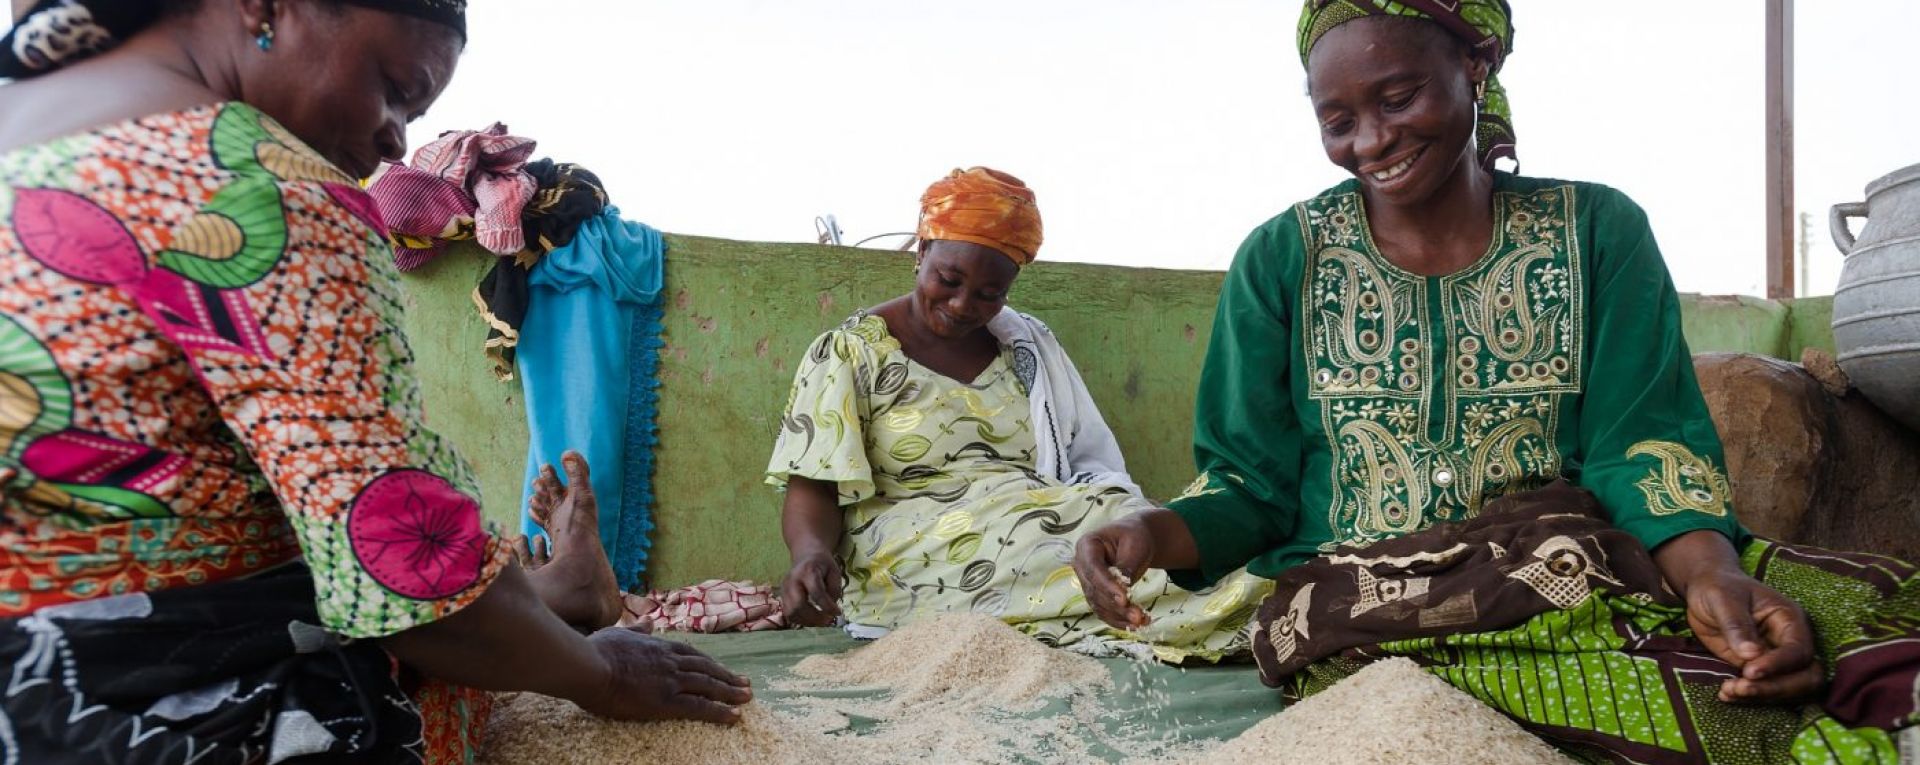 Ghanan women sorting grains